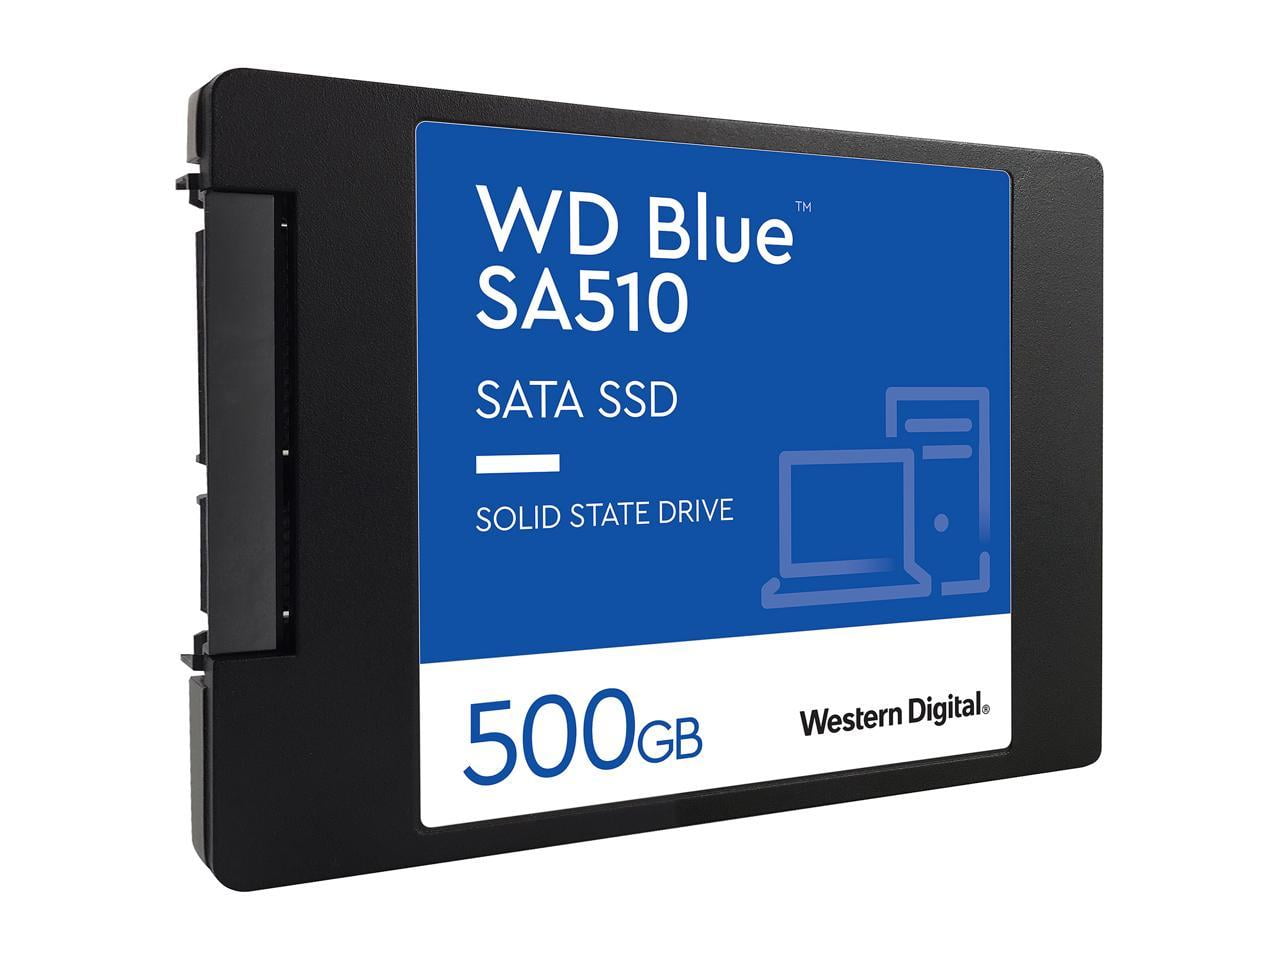  Western Digital 250GB WD Blue SA510 SATA Internal Solid State  Drive SSD - SATA III 6 Gb/s, 2.5/7mm, Up to 555 MB/s - WDS250G3B0A :  Electronics